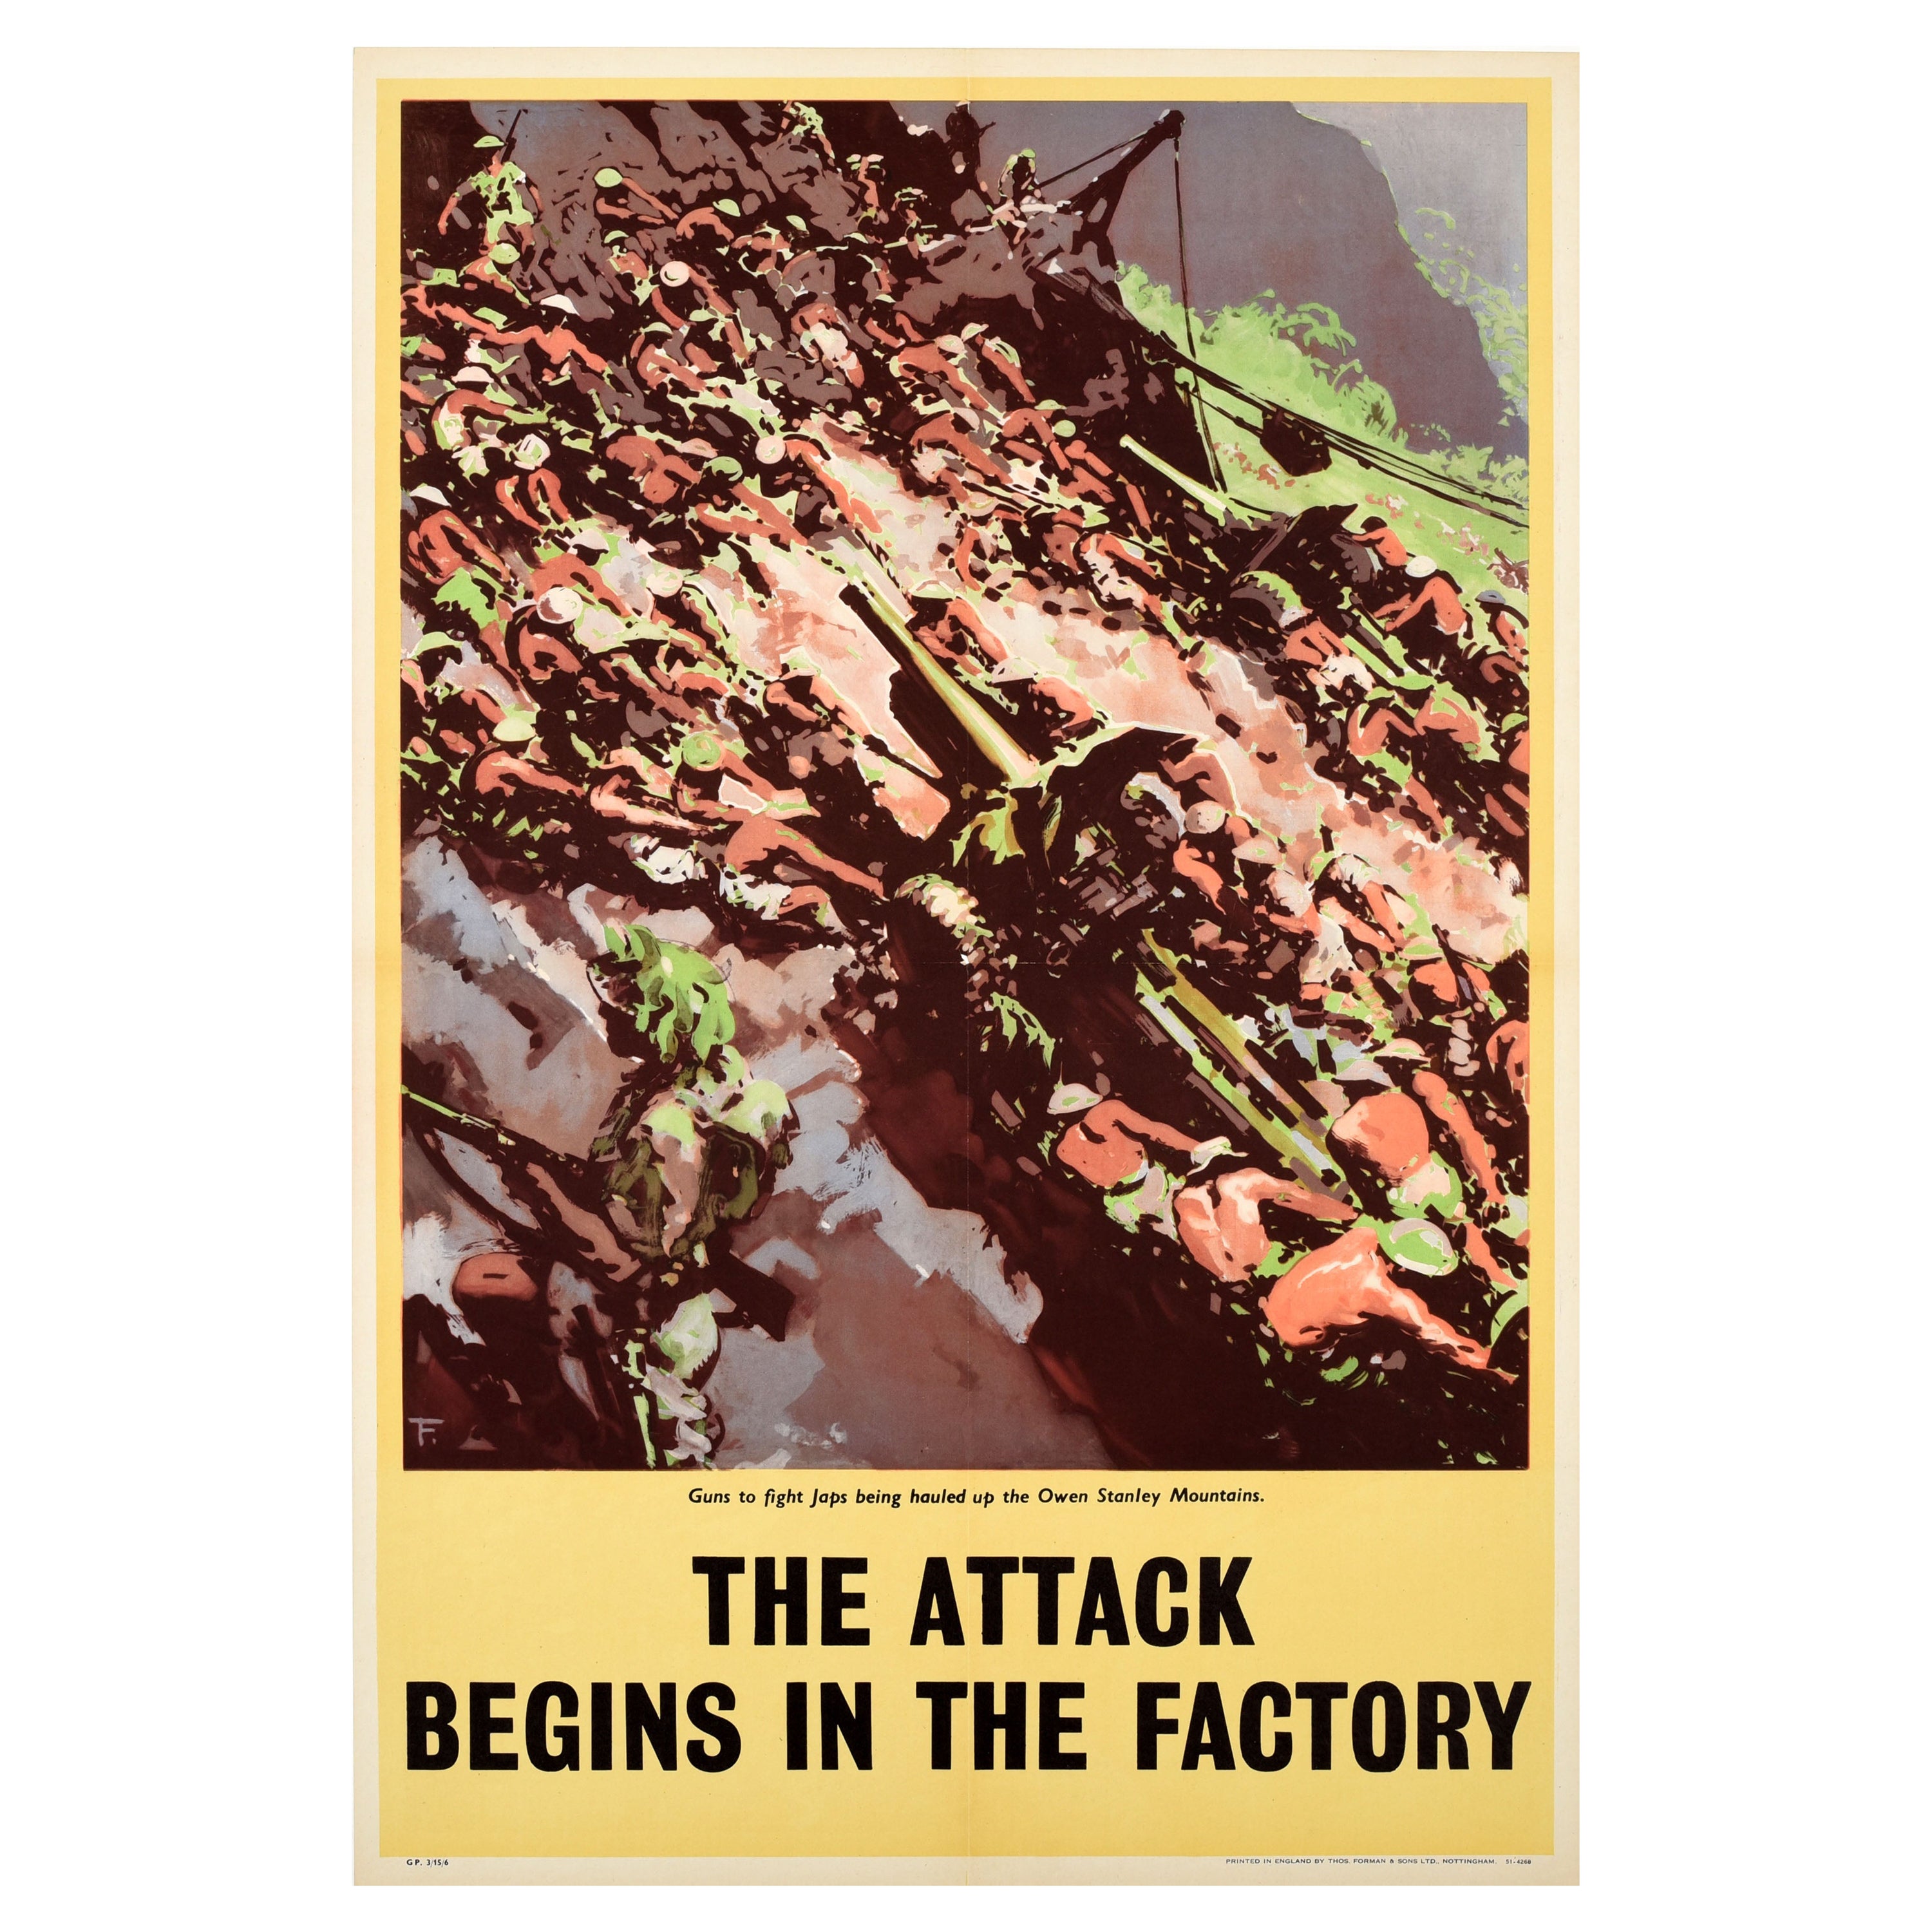 Original Vintage WWII Poster Attack Factory Owen Stanley Mountains Pacific War